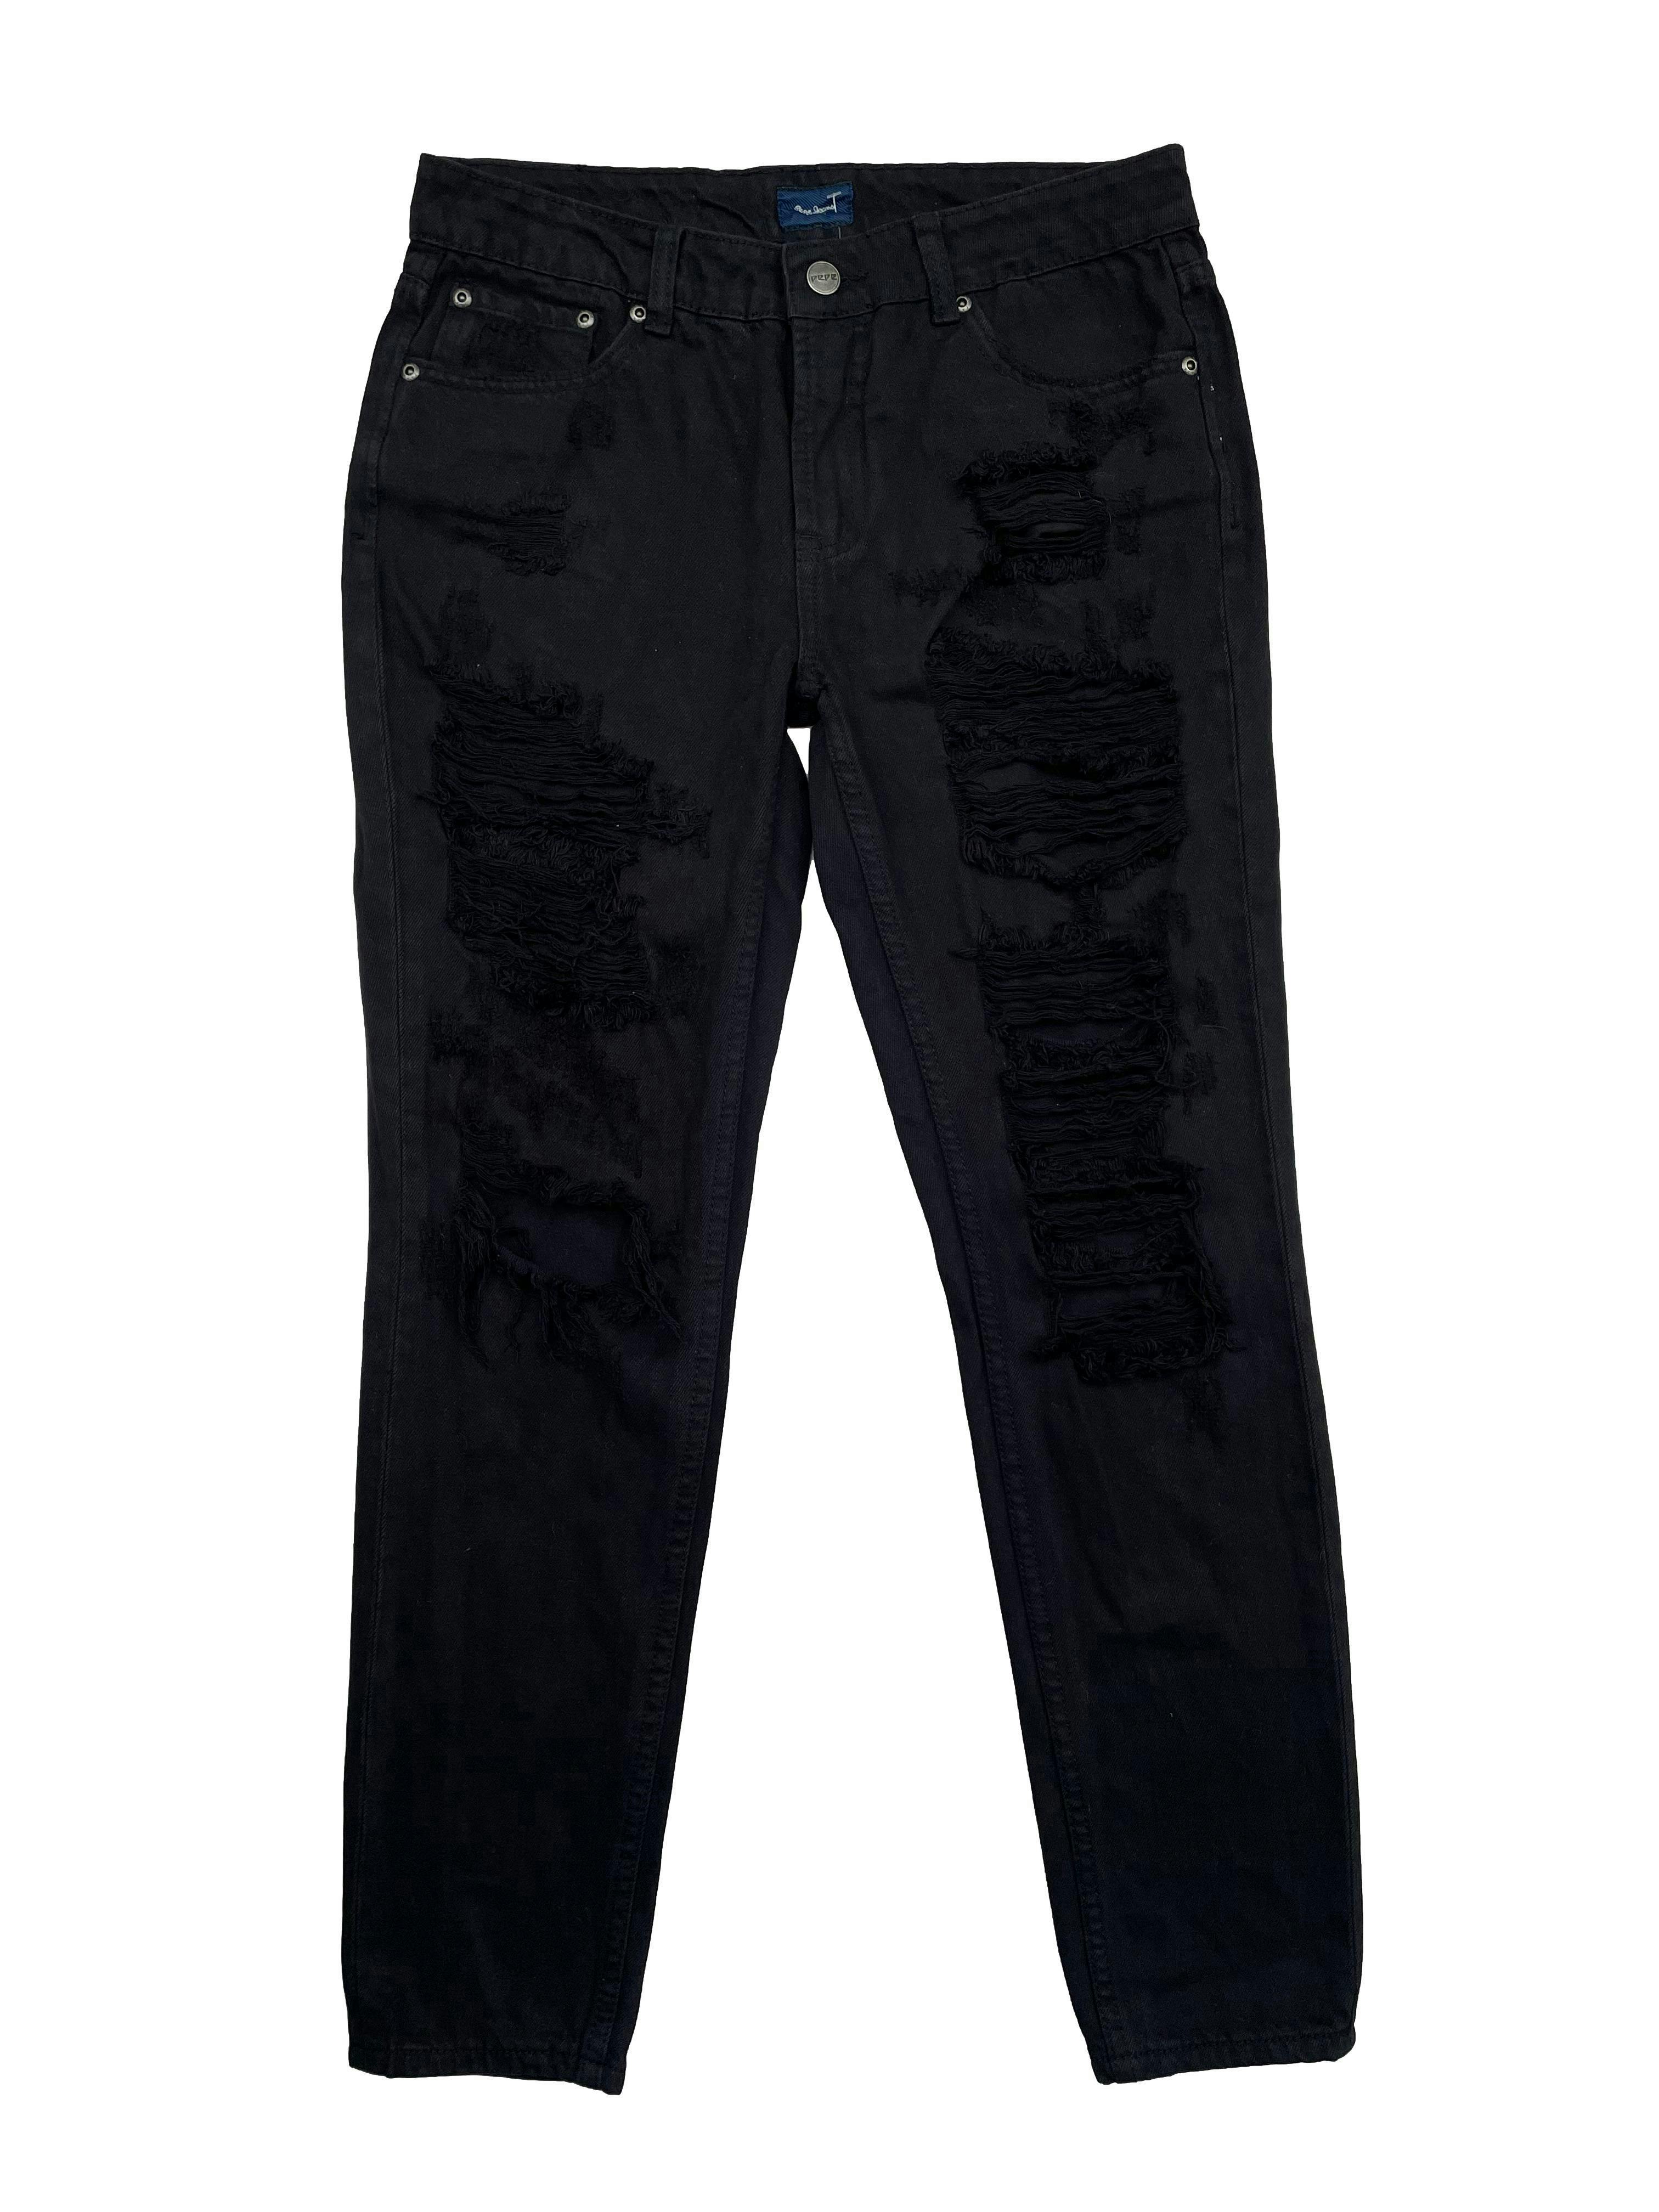 Pantalón negro Pepe Jeans 100% algodón, corte slim de tiro medio con rasgados .Cintura 76cm, Largo 94cm.